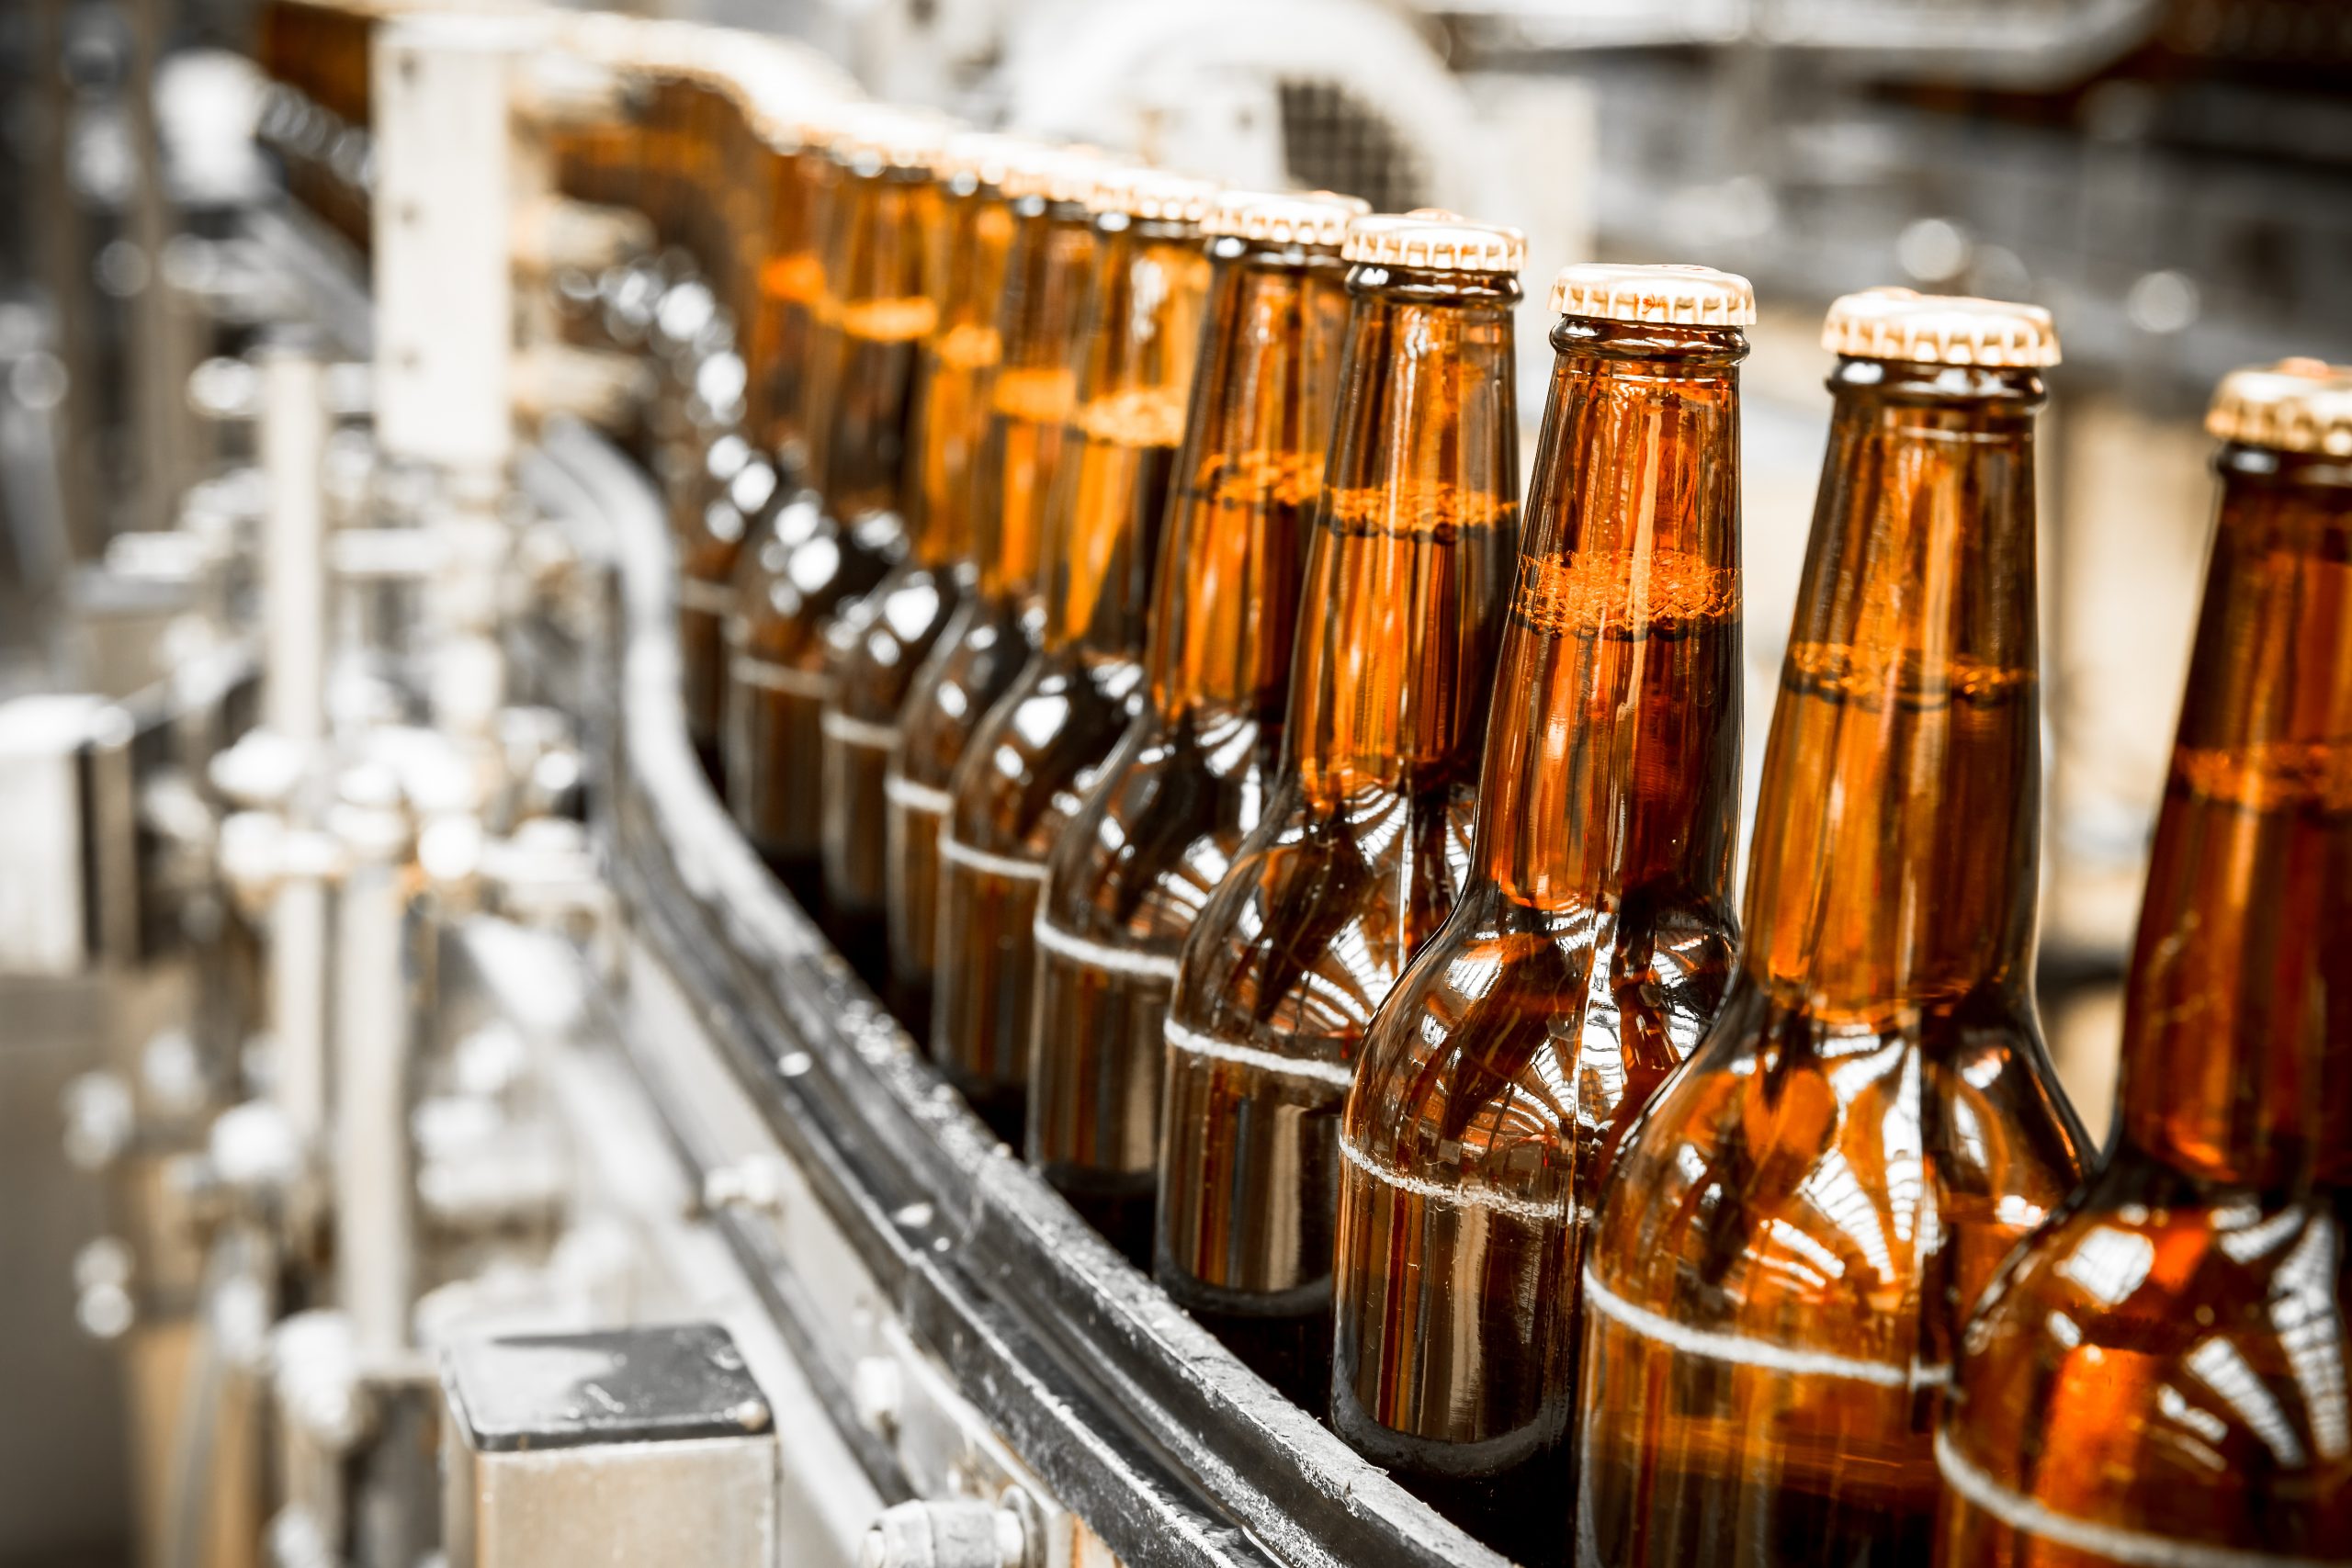 Beverage distribution software for manufacturers